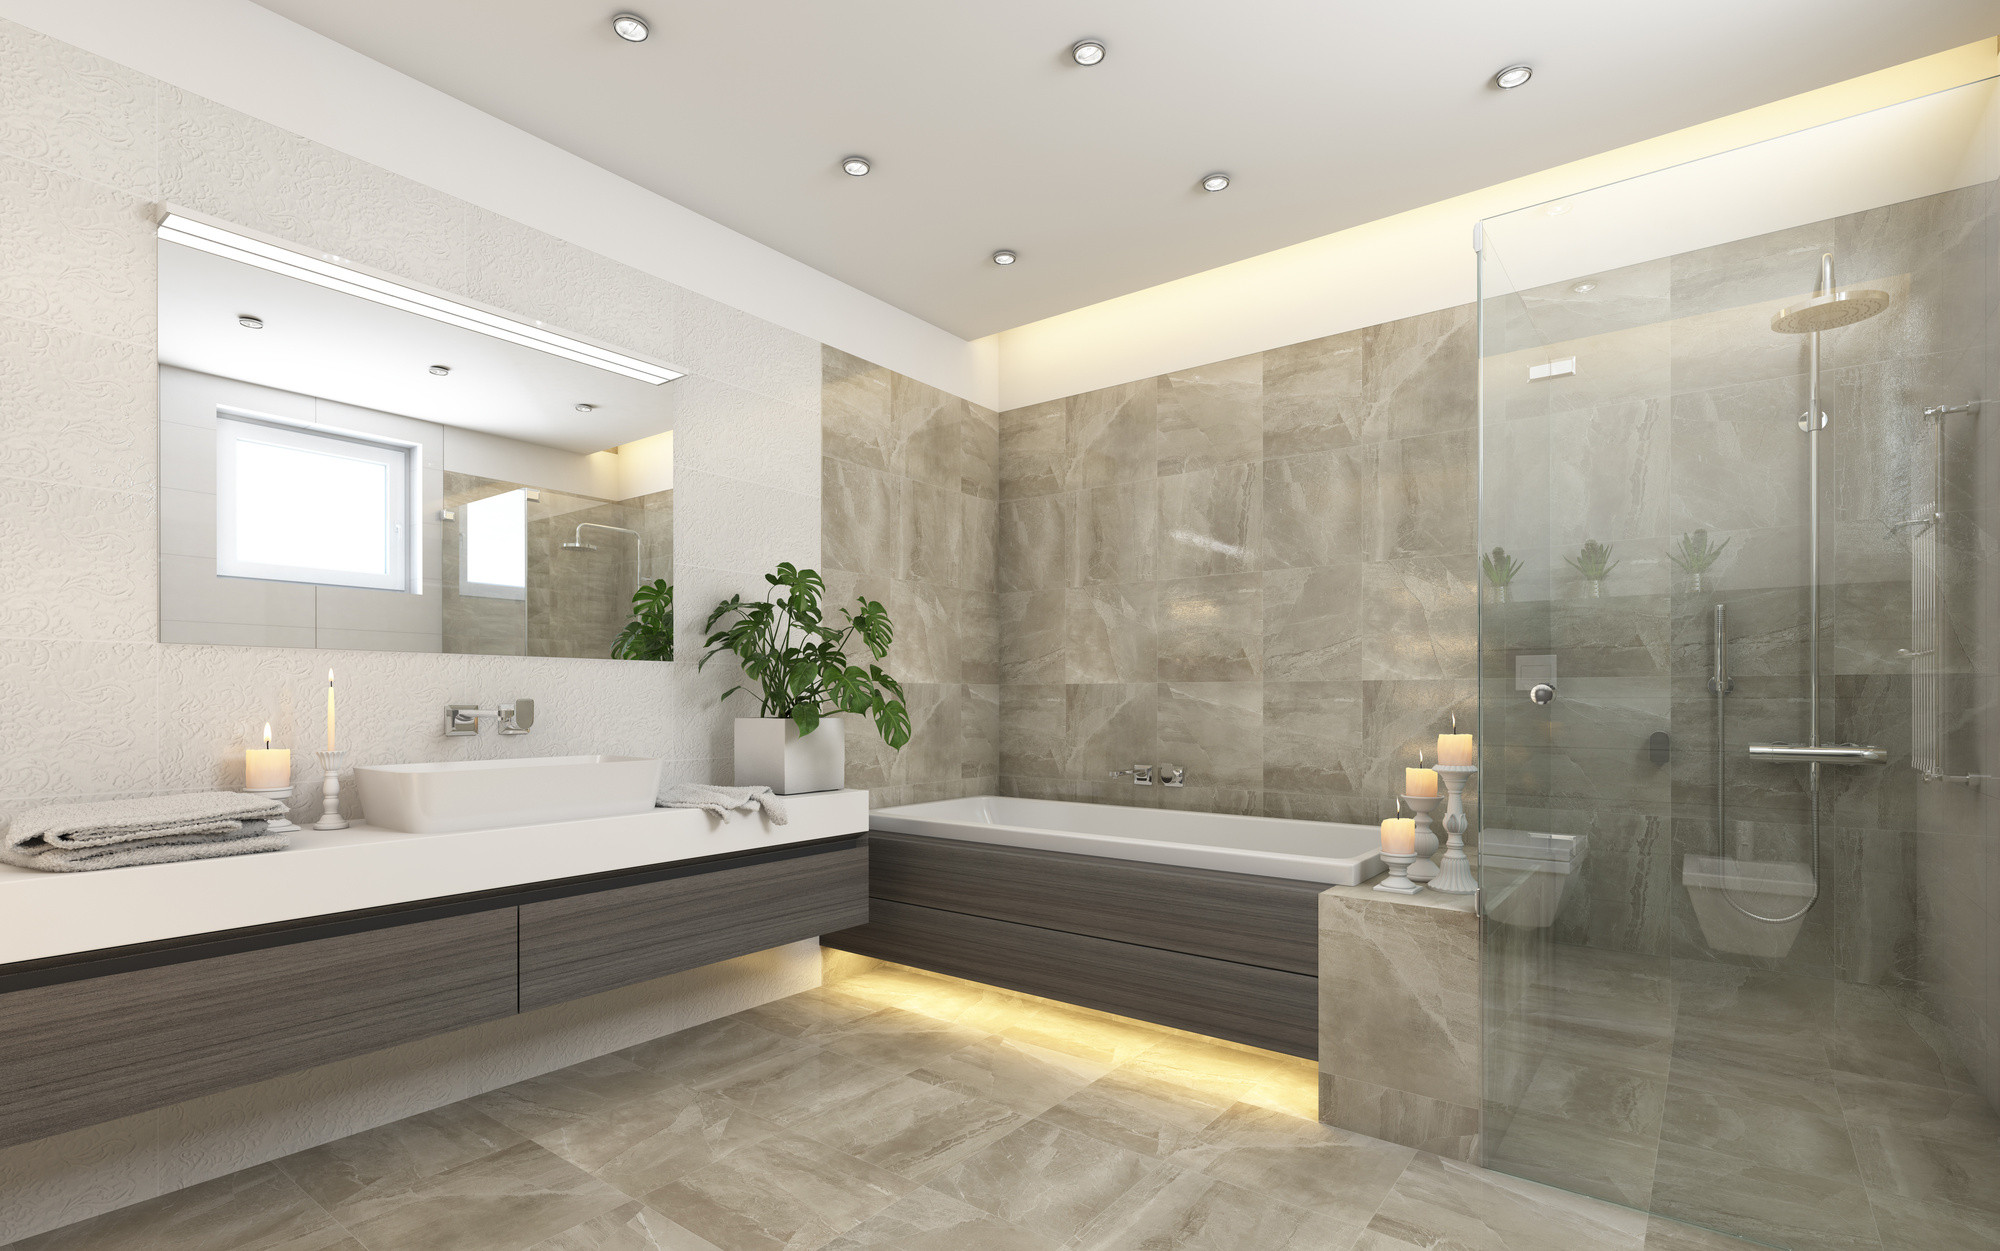 Bathroom Design Pictures
 10 mon Features of Luxury Bathroom Designs